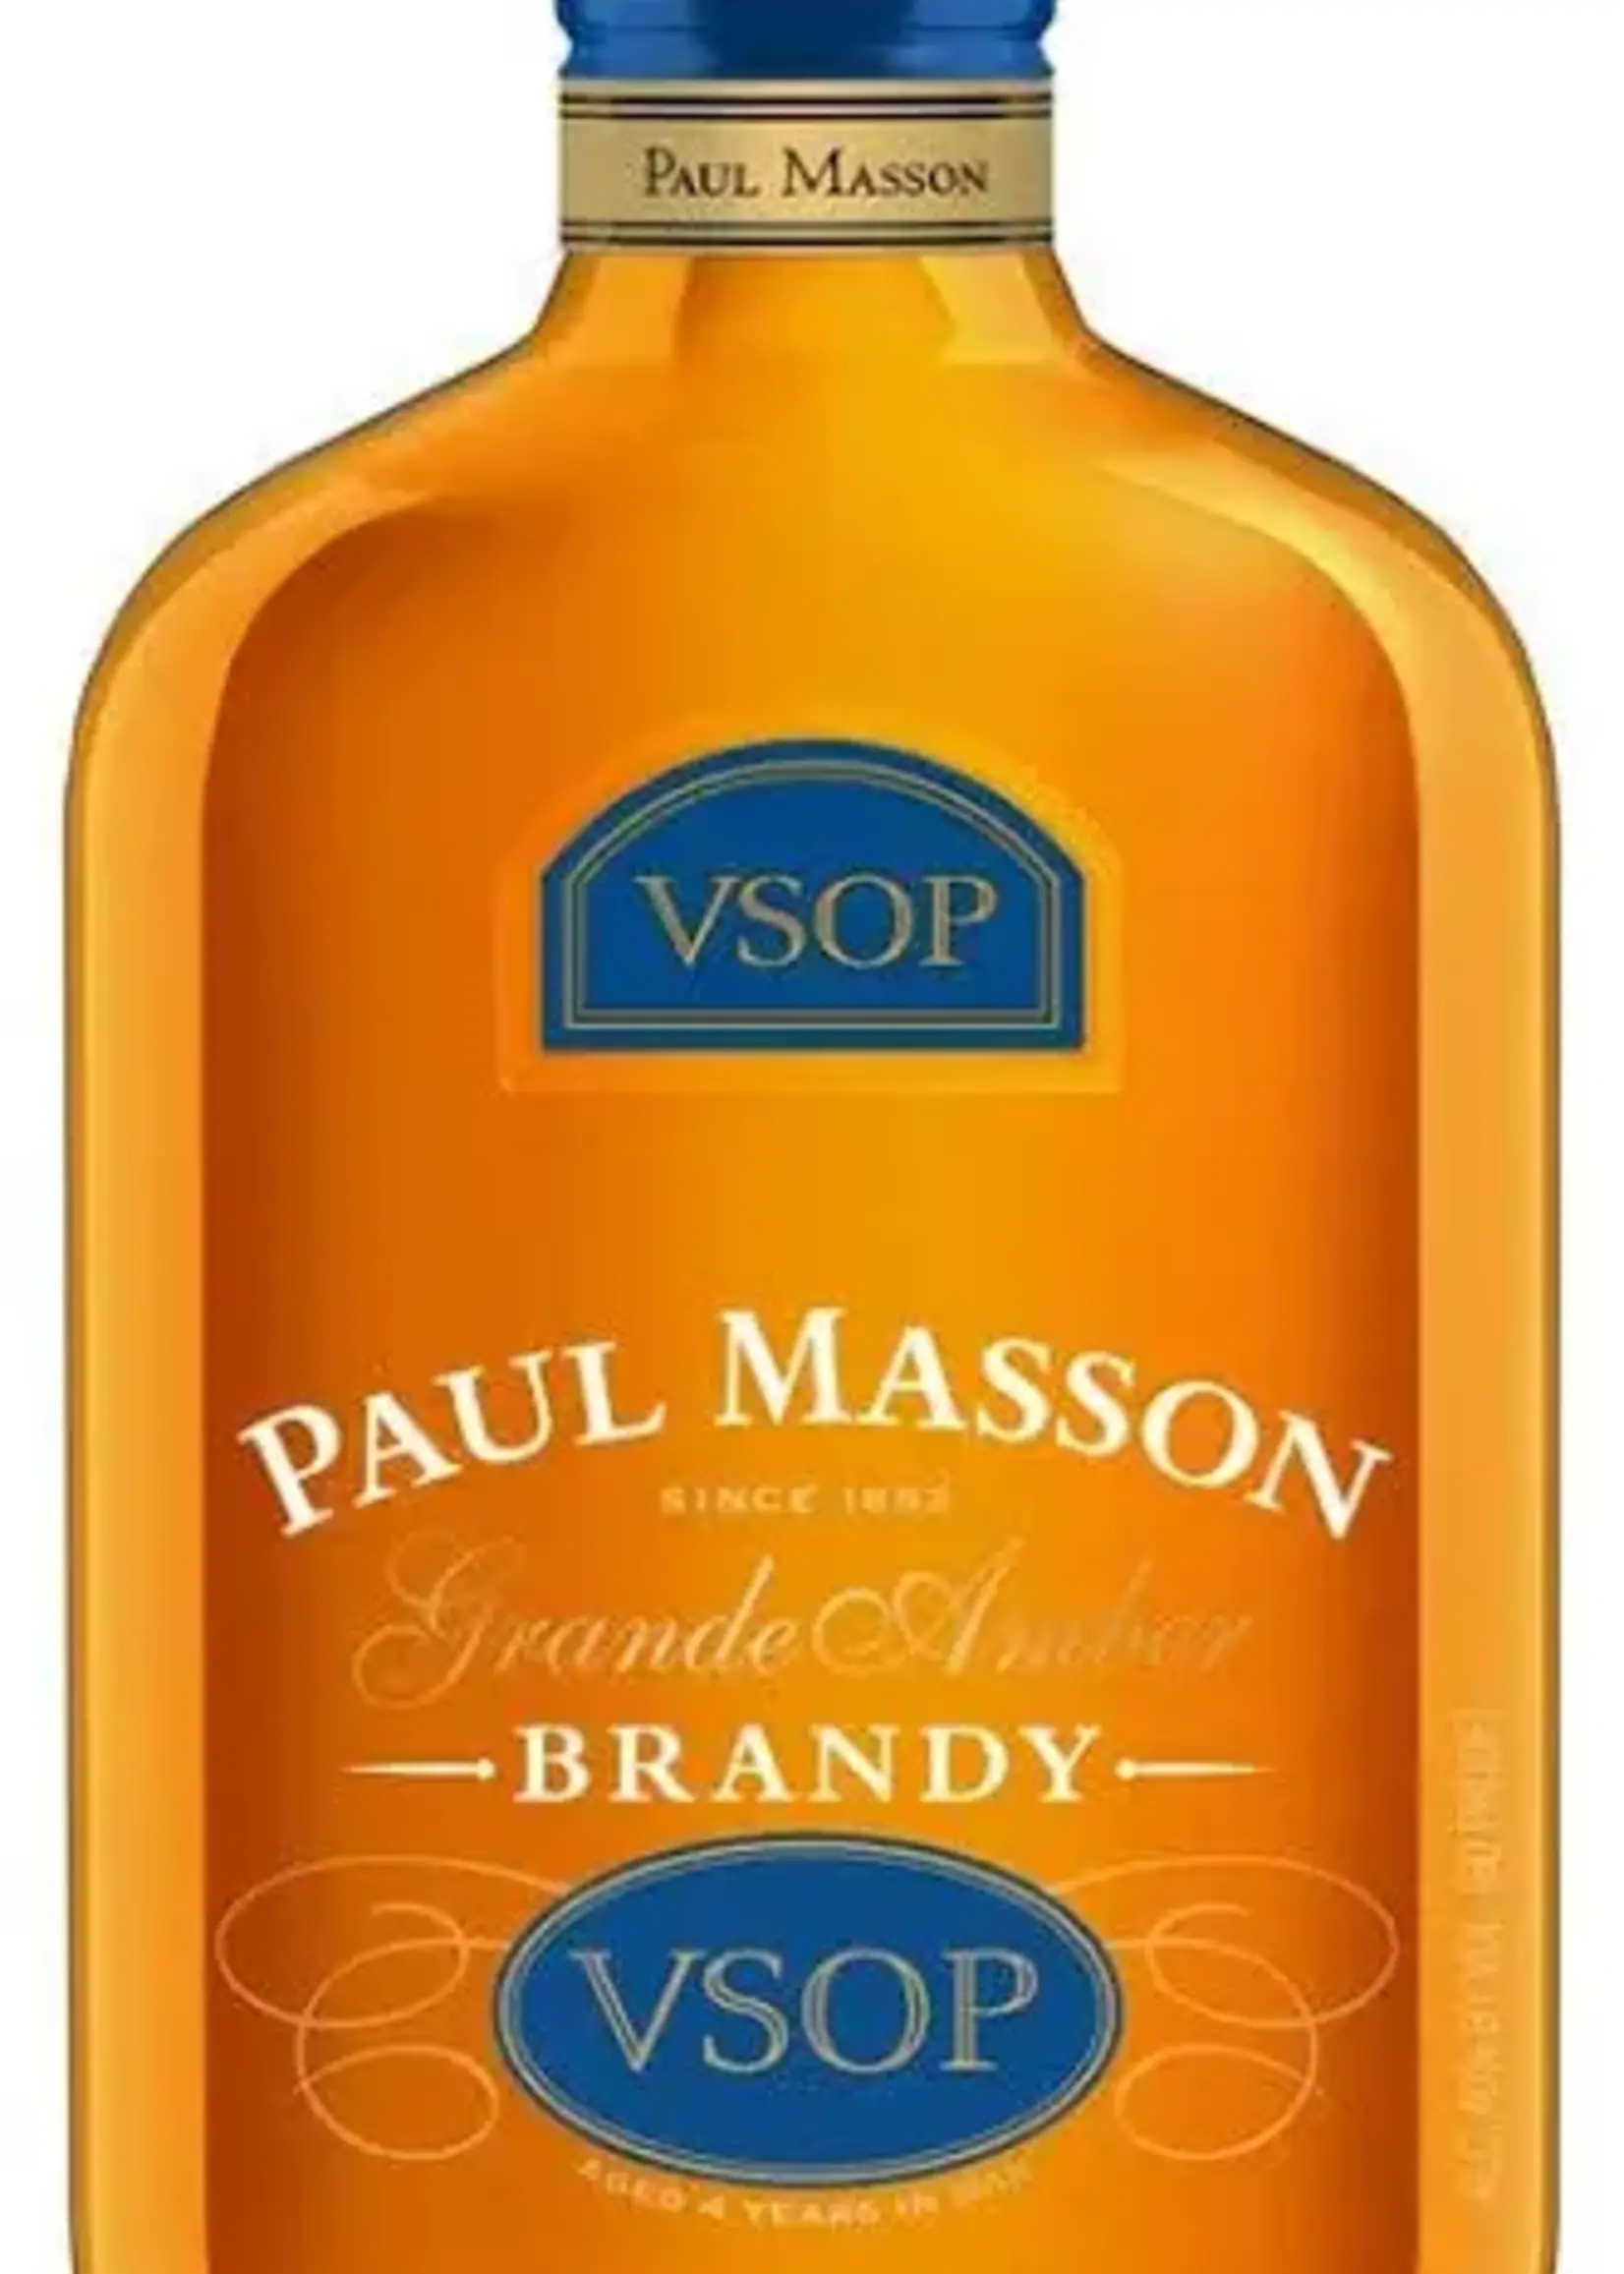 BRANDY paul masson grande amber brandy  vsop 375ml